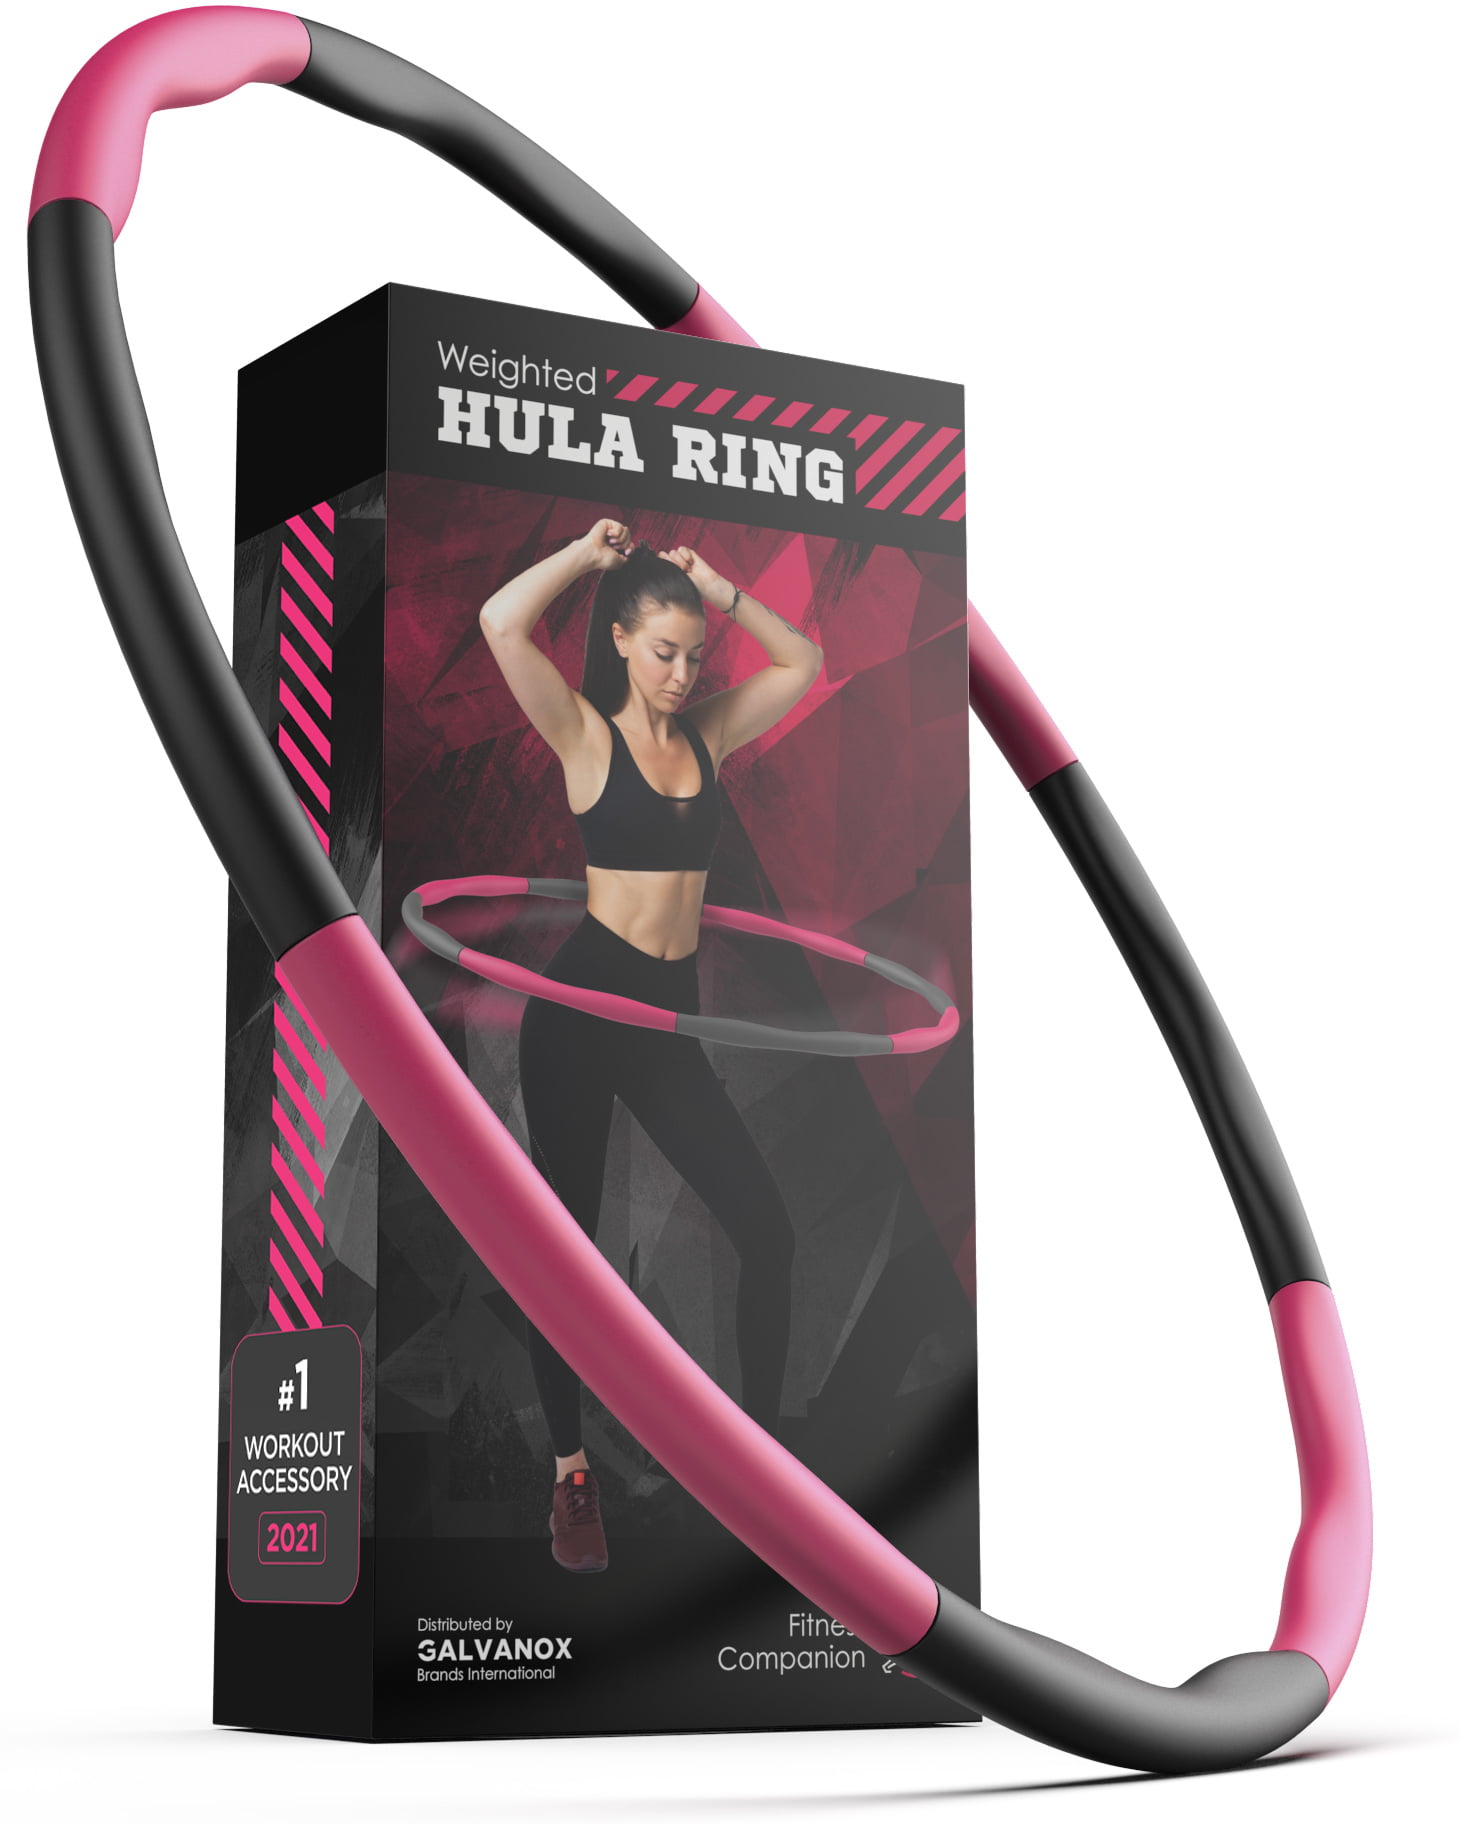 YNIEIAA Fitness Hoola Hoop for Adults,Adult Folding Weight Loss Hoop,8 Section Detachable Design,Wave Groove Design Weighted Foam Padded Fitness Hula Hoop Ring